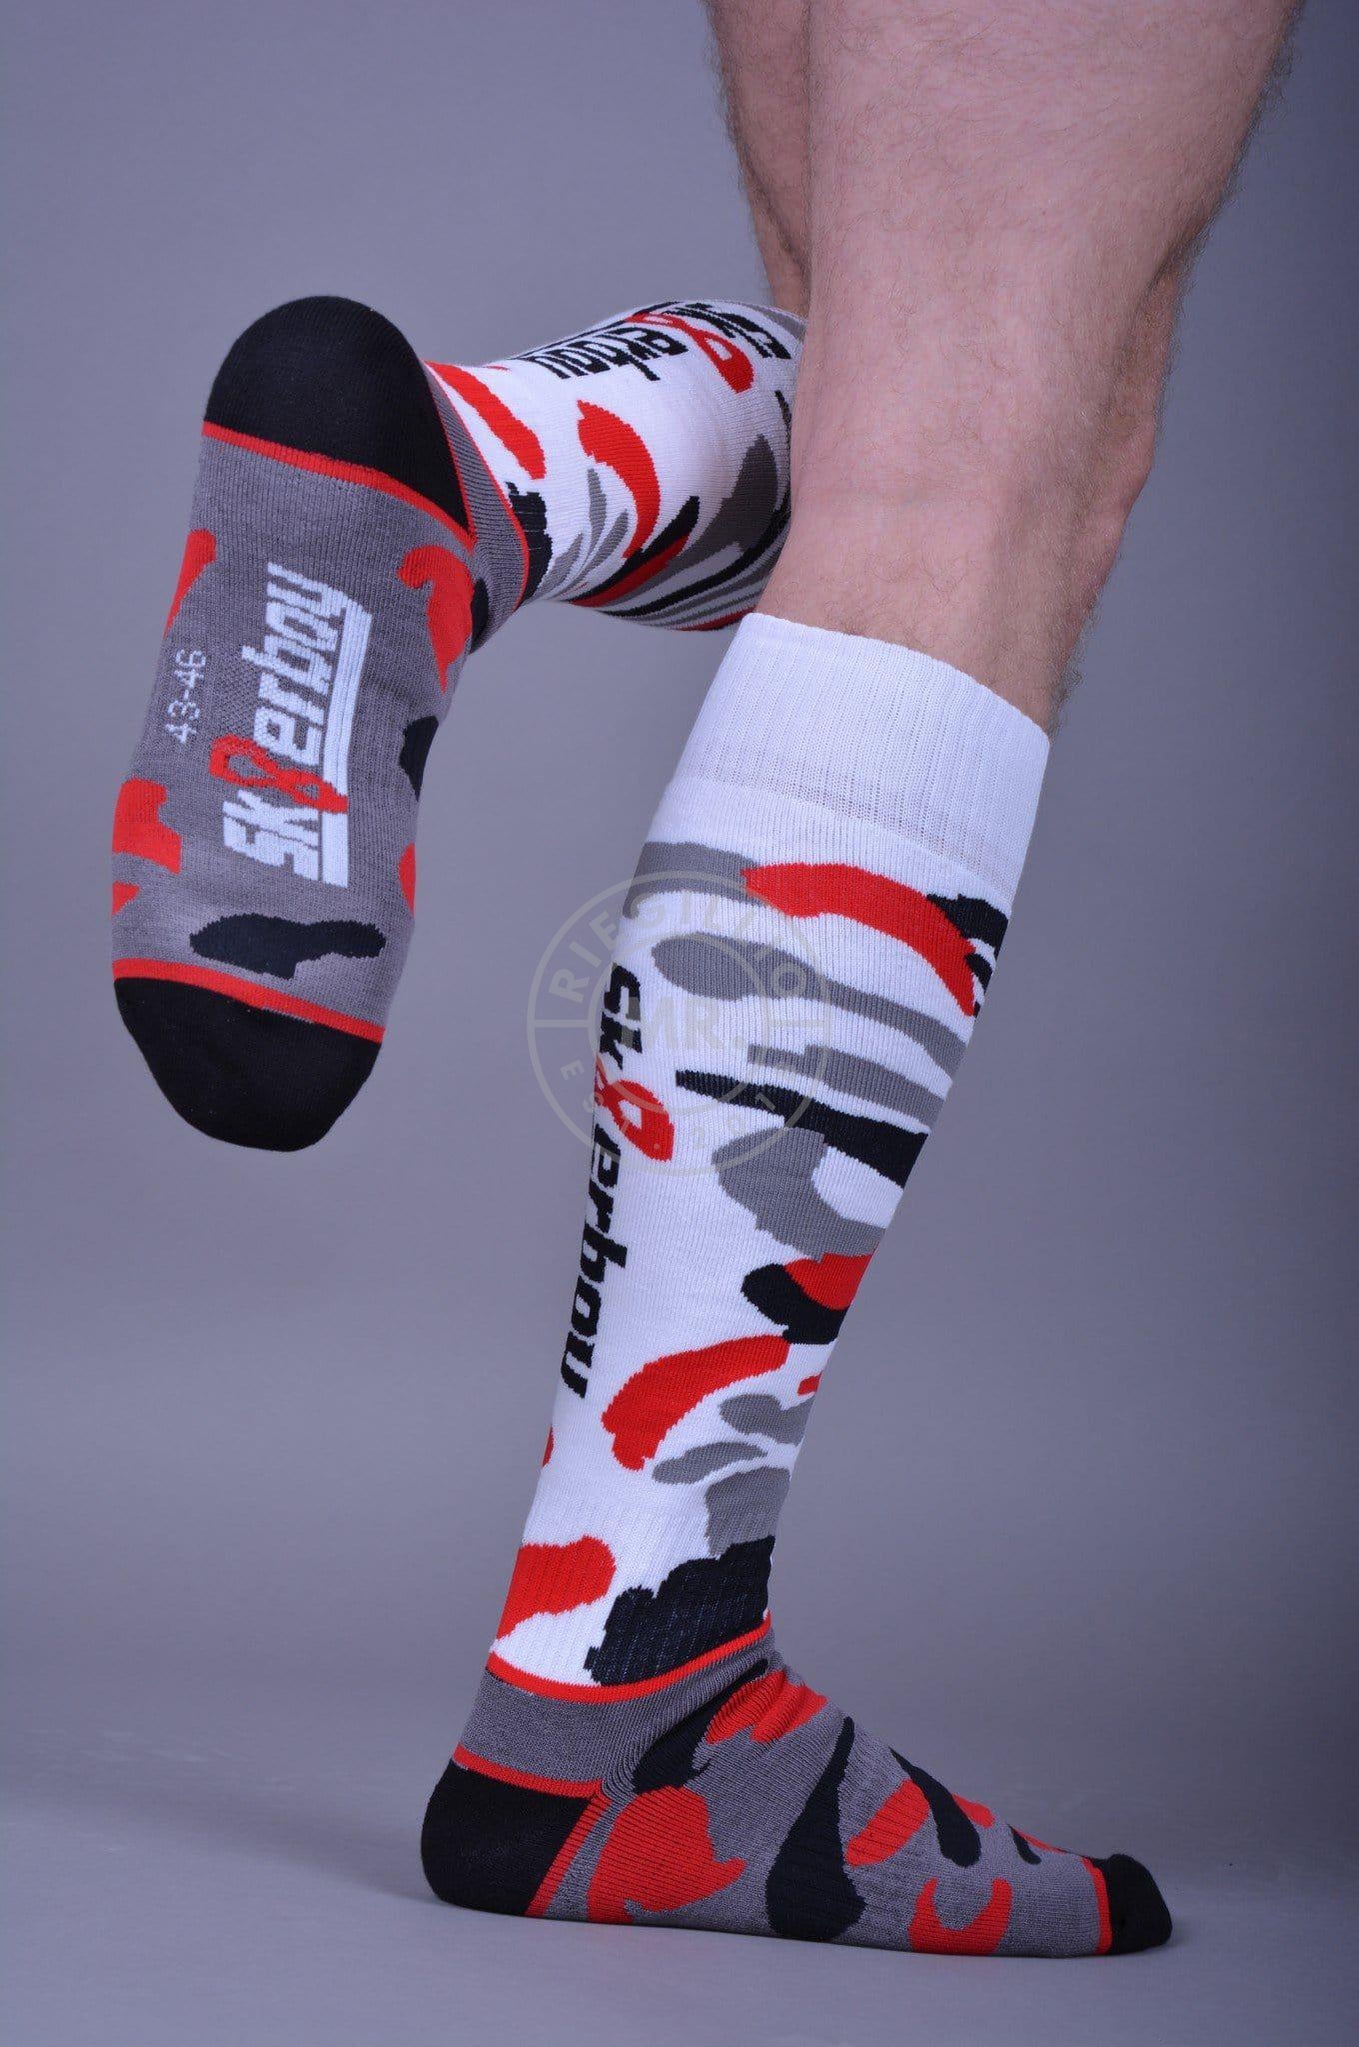 Sk8erboy MX Socks at MR. Riegillio